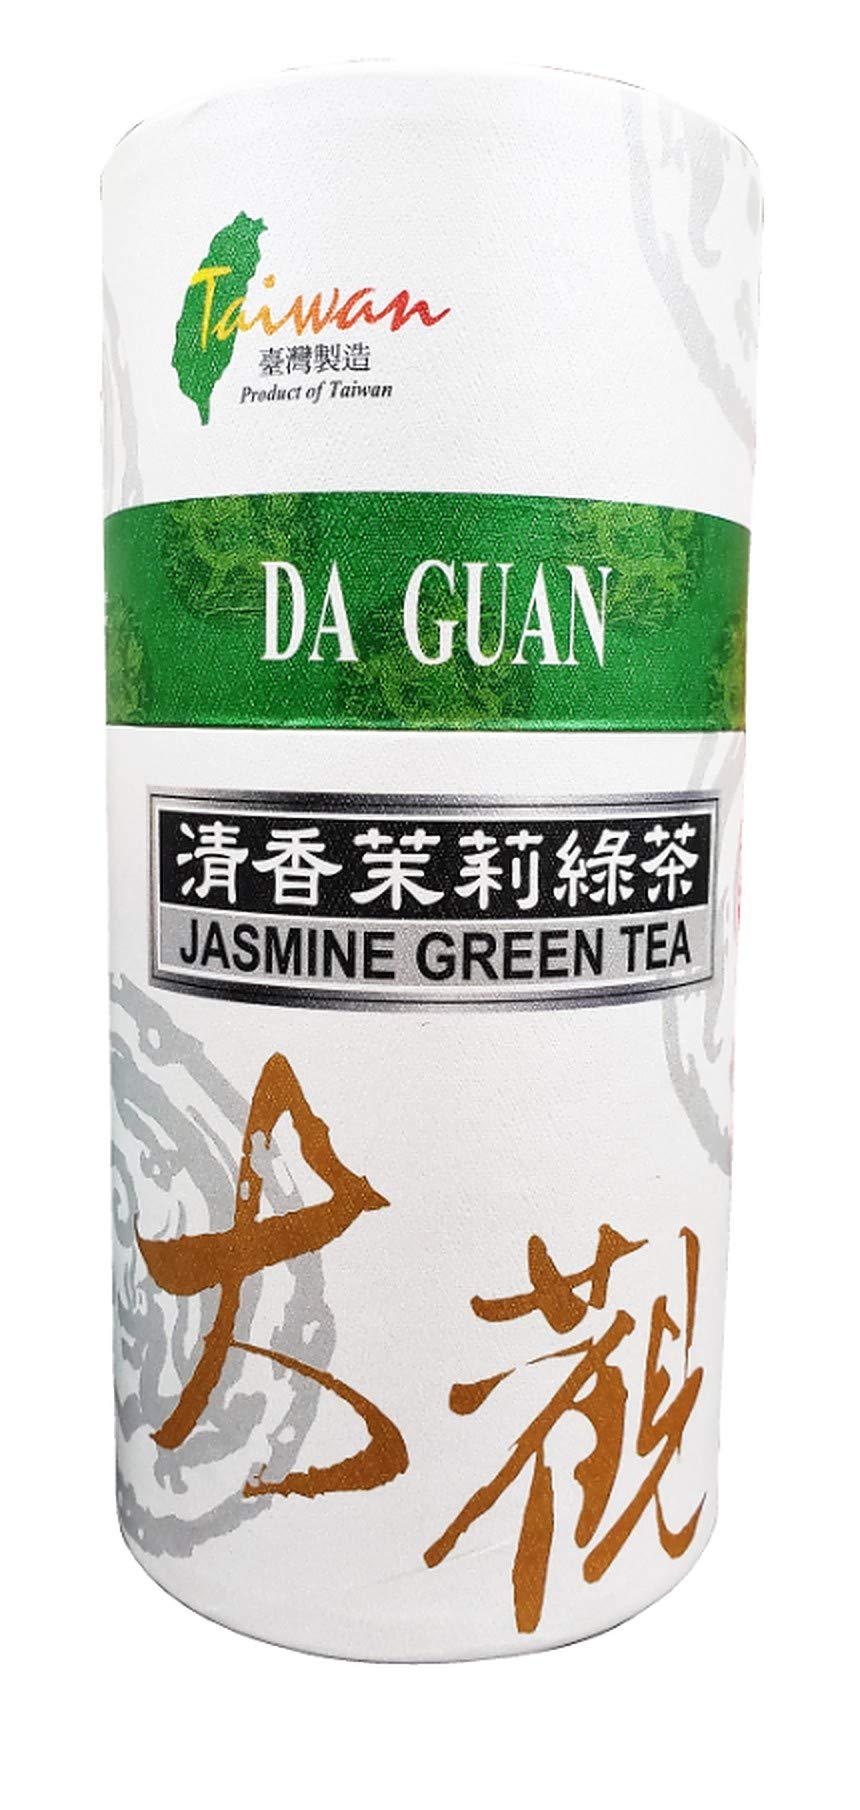 Justmake Taiwan Tea Brand Oolong and Green Tea (Jasmine Green Tea, 1 Pack)